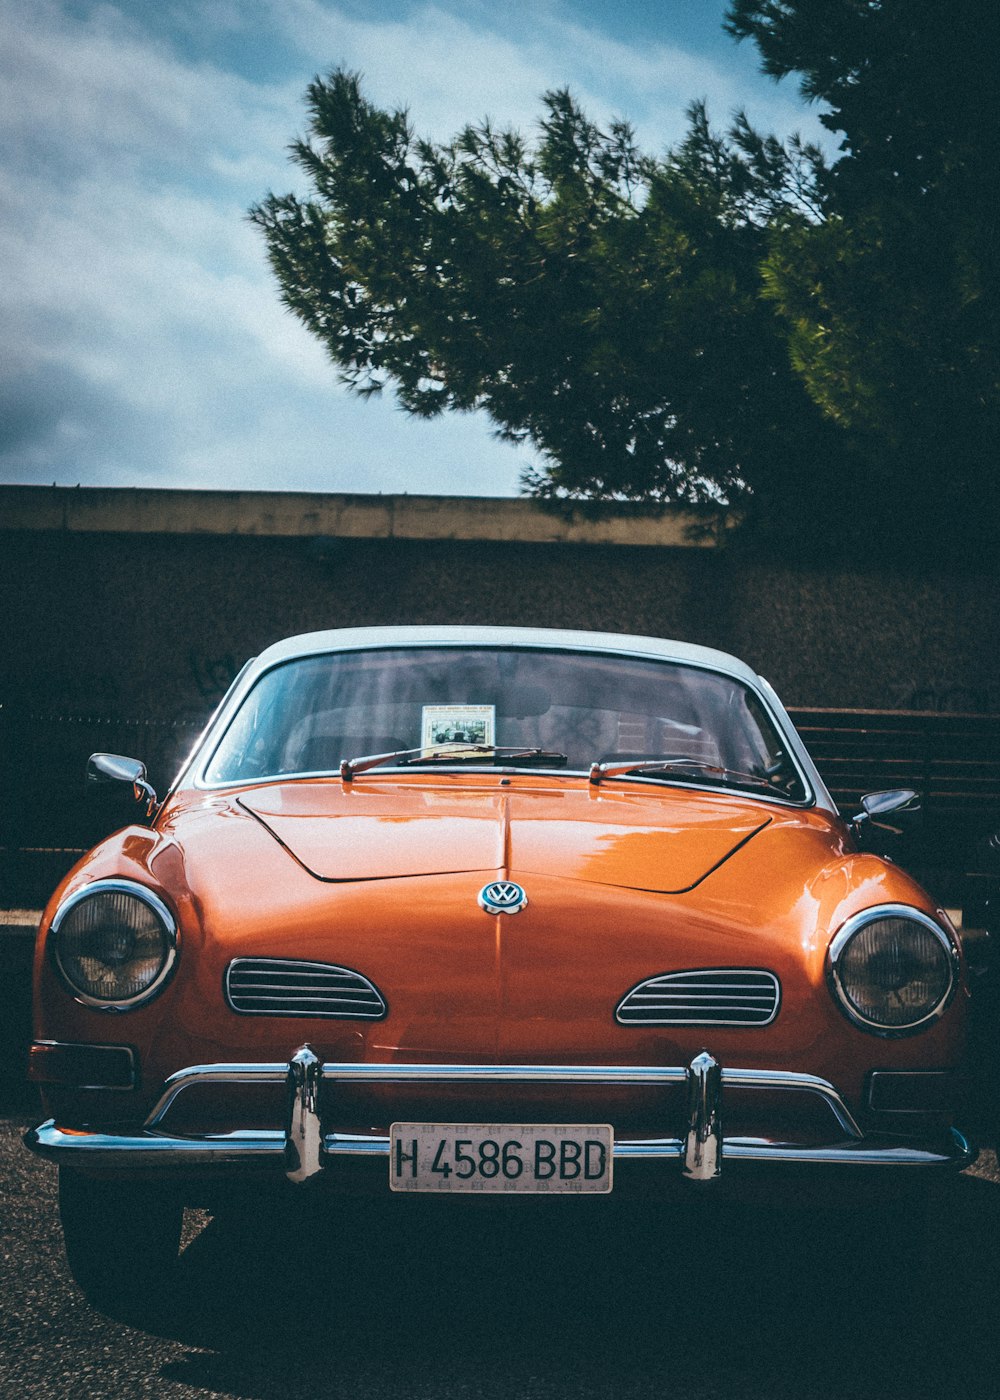 vintage orange car near tree